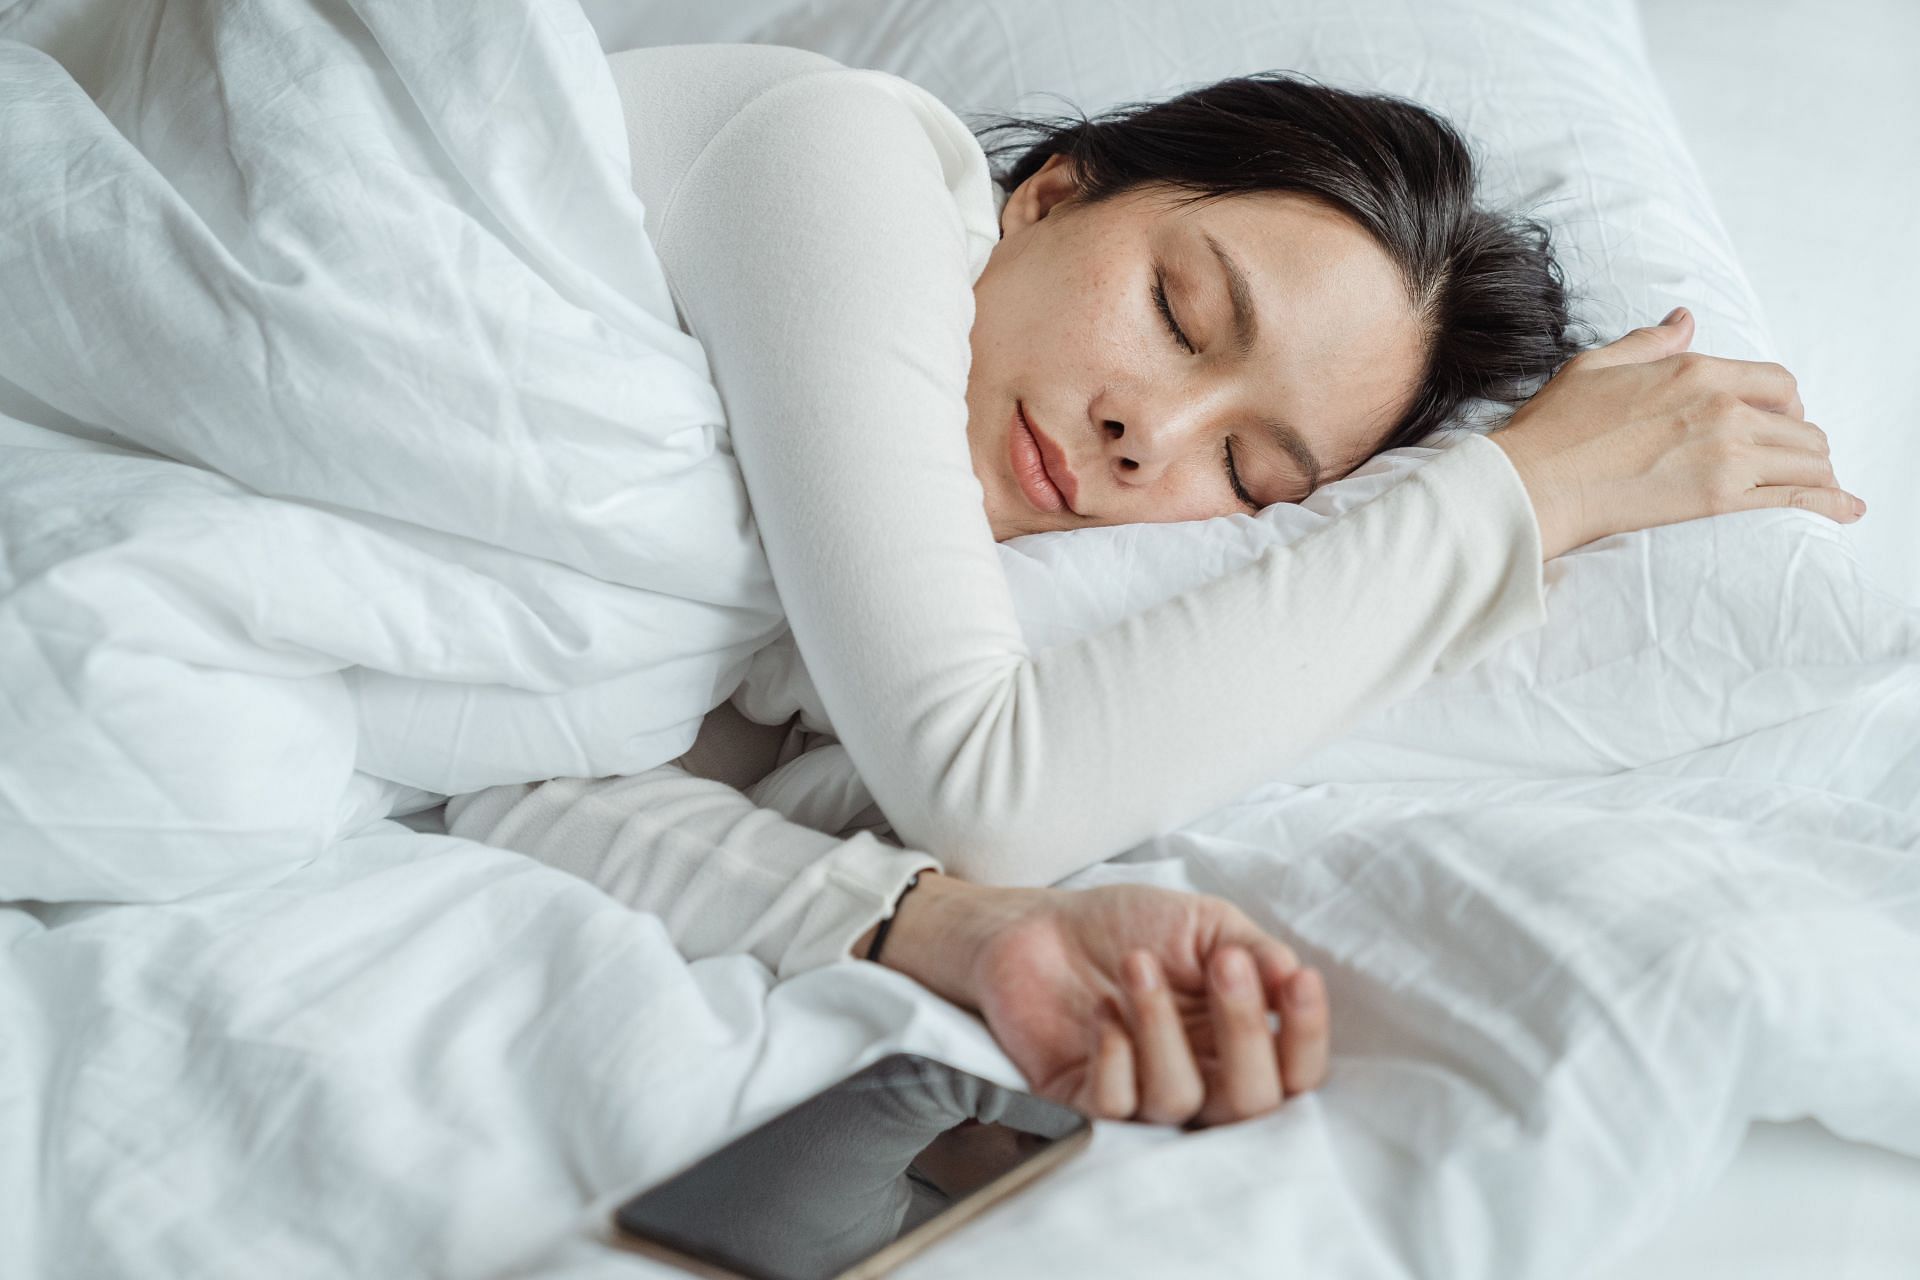 Getting 8 hours of sleep can help you to regulate your hormones. (Image via Pexels / Ketut Subiyanto)